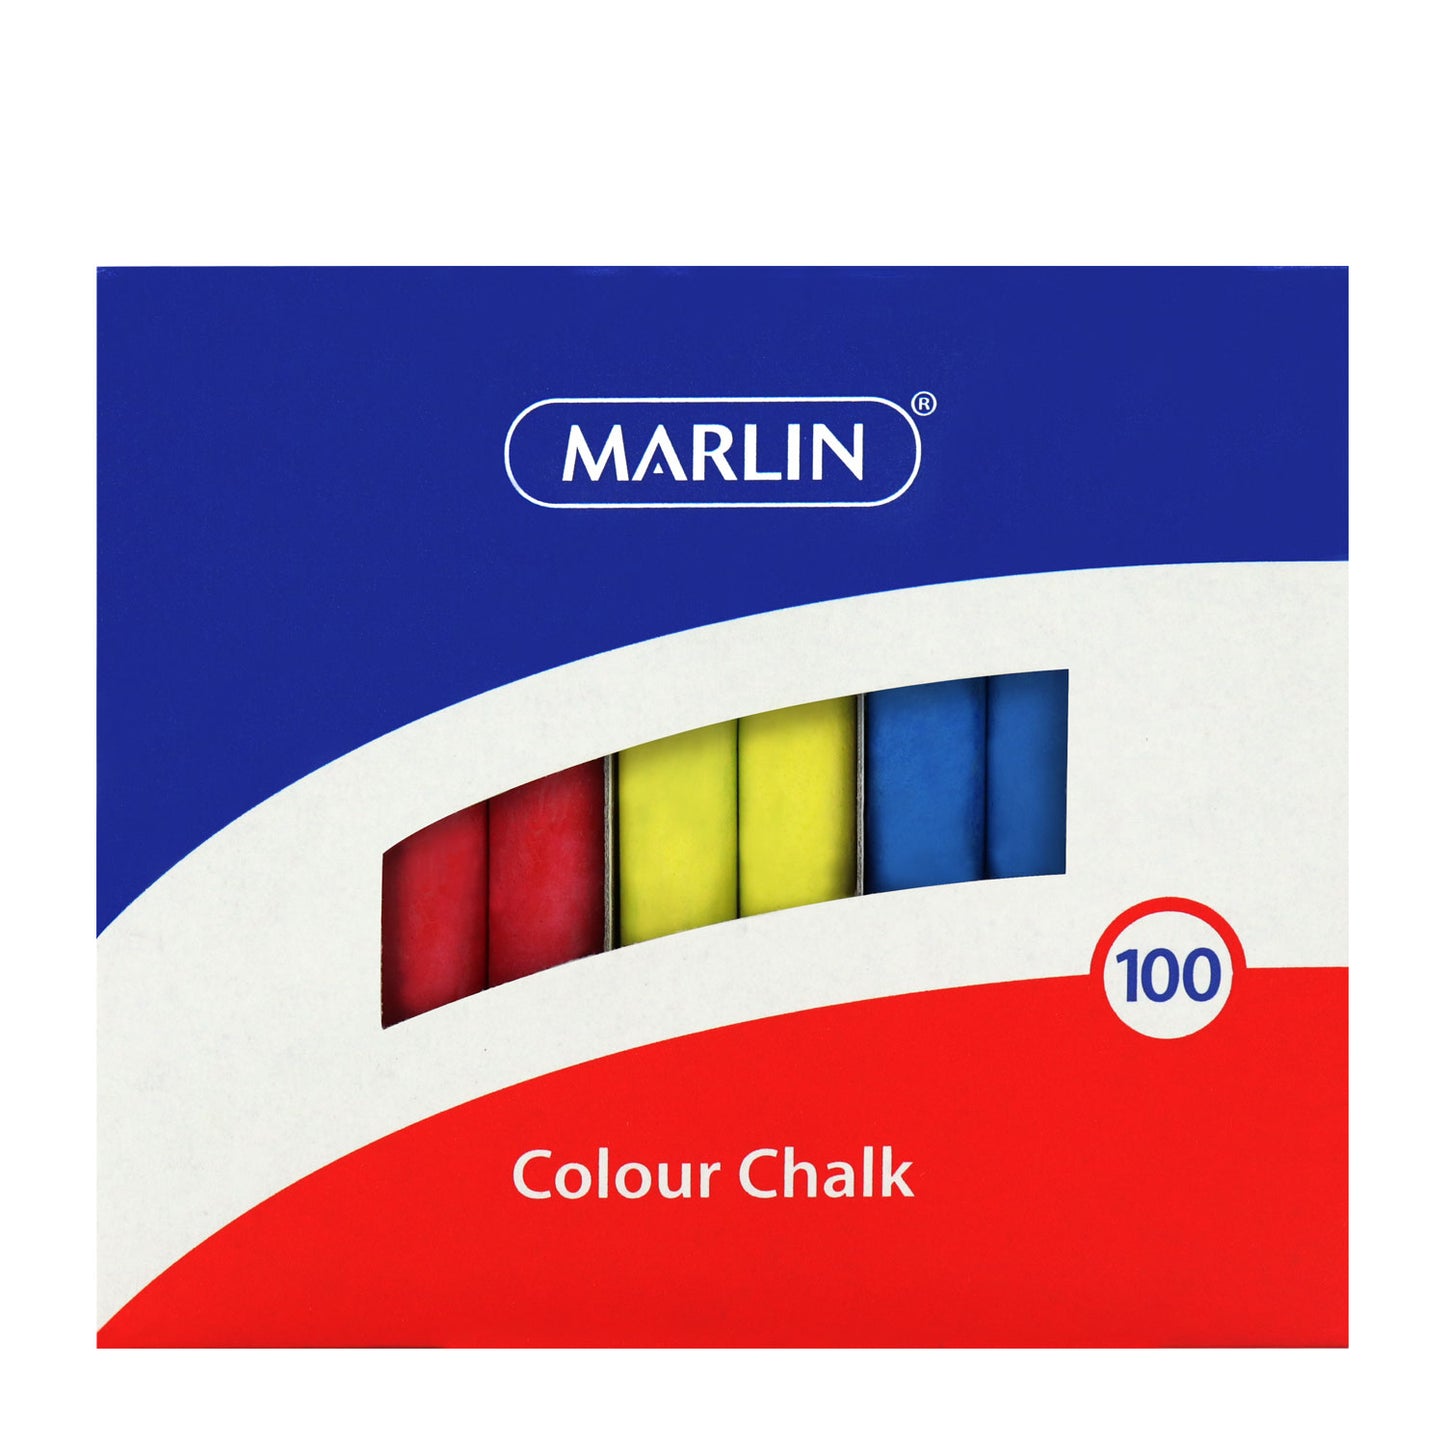 Marlin Colour Chalk (100 Chalk Pieces per Box, 10 Boxes)